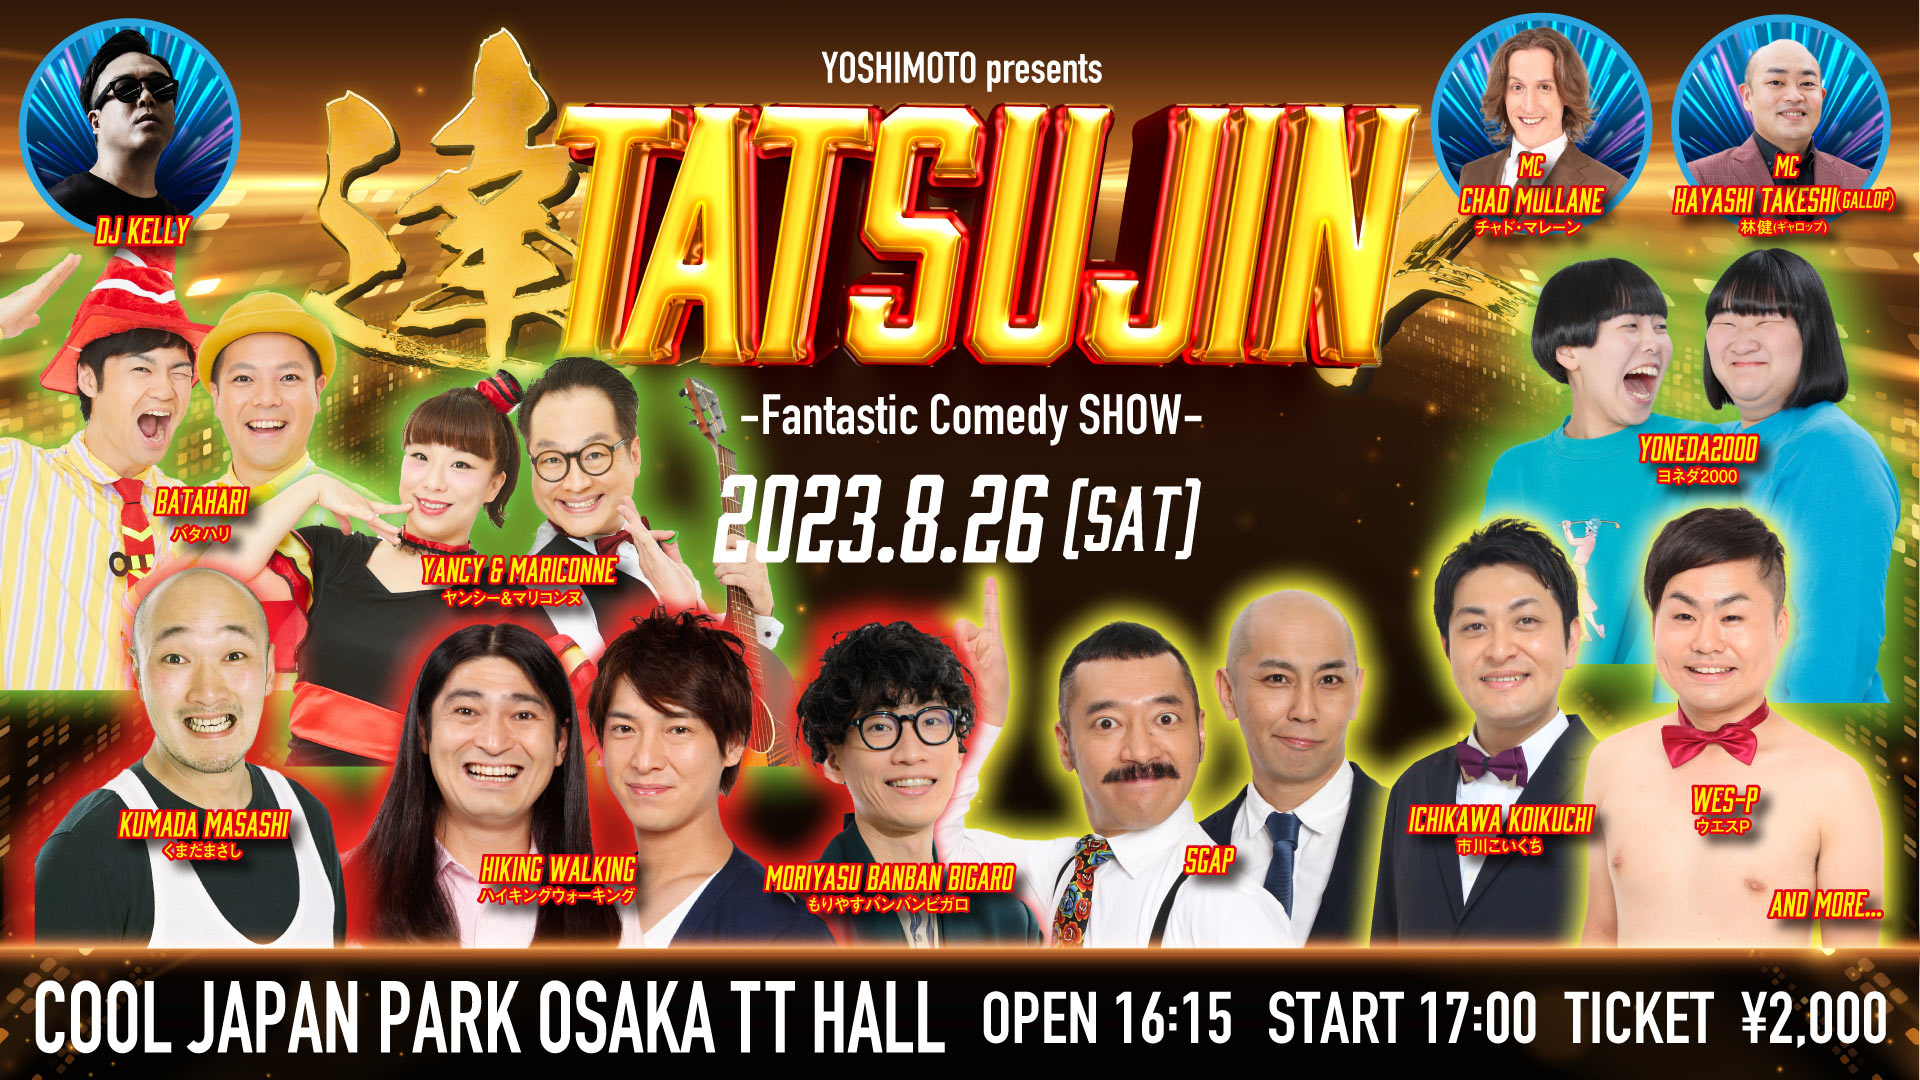 YOSHIMOTO presents TATSUJIN -Fantastic Comedy SHOW-